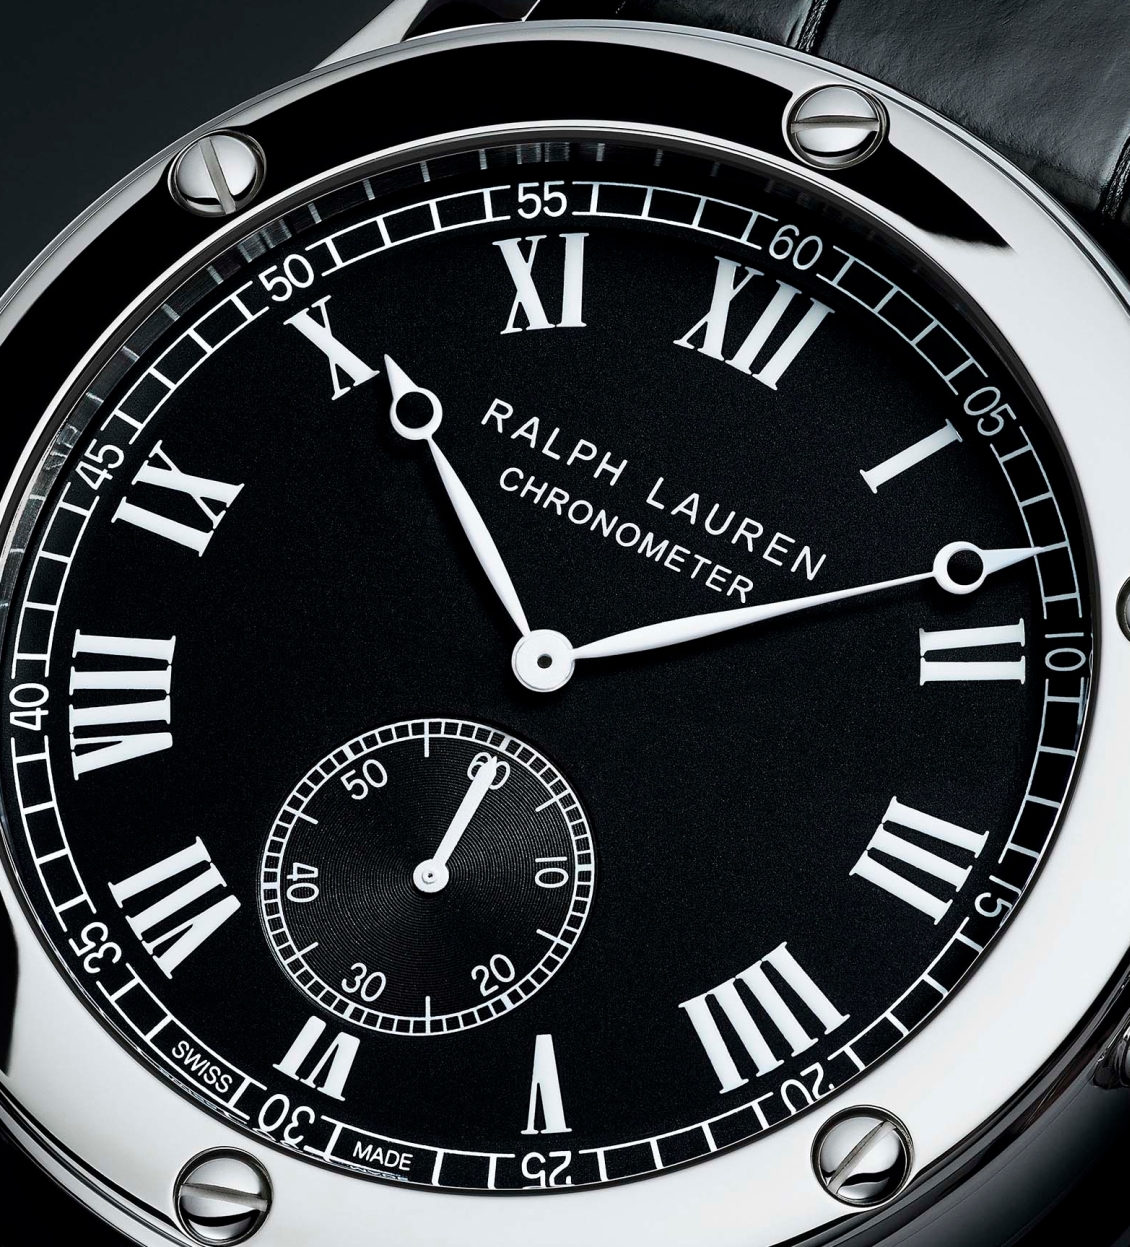 Ralph Lauren Sporting Classic Chronometer watch